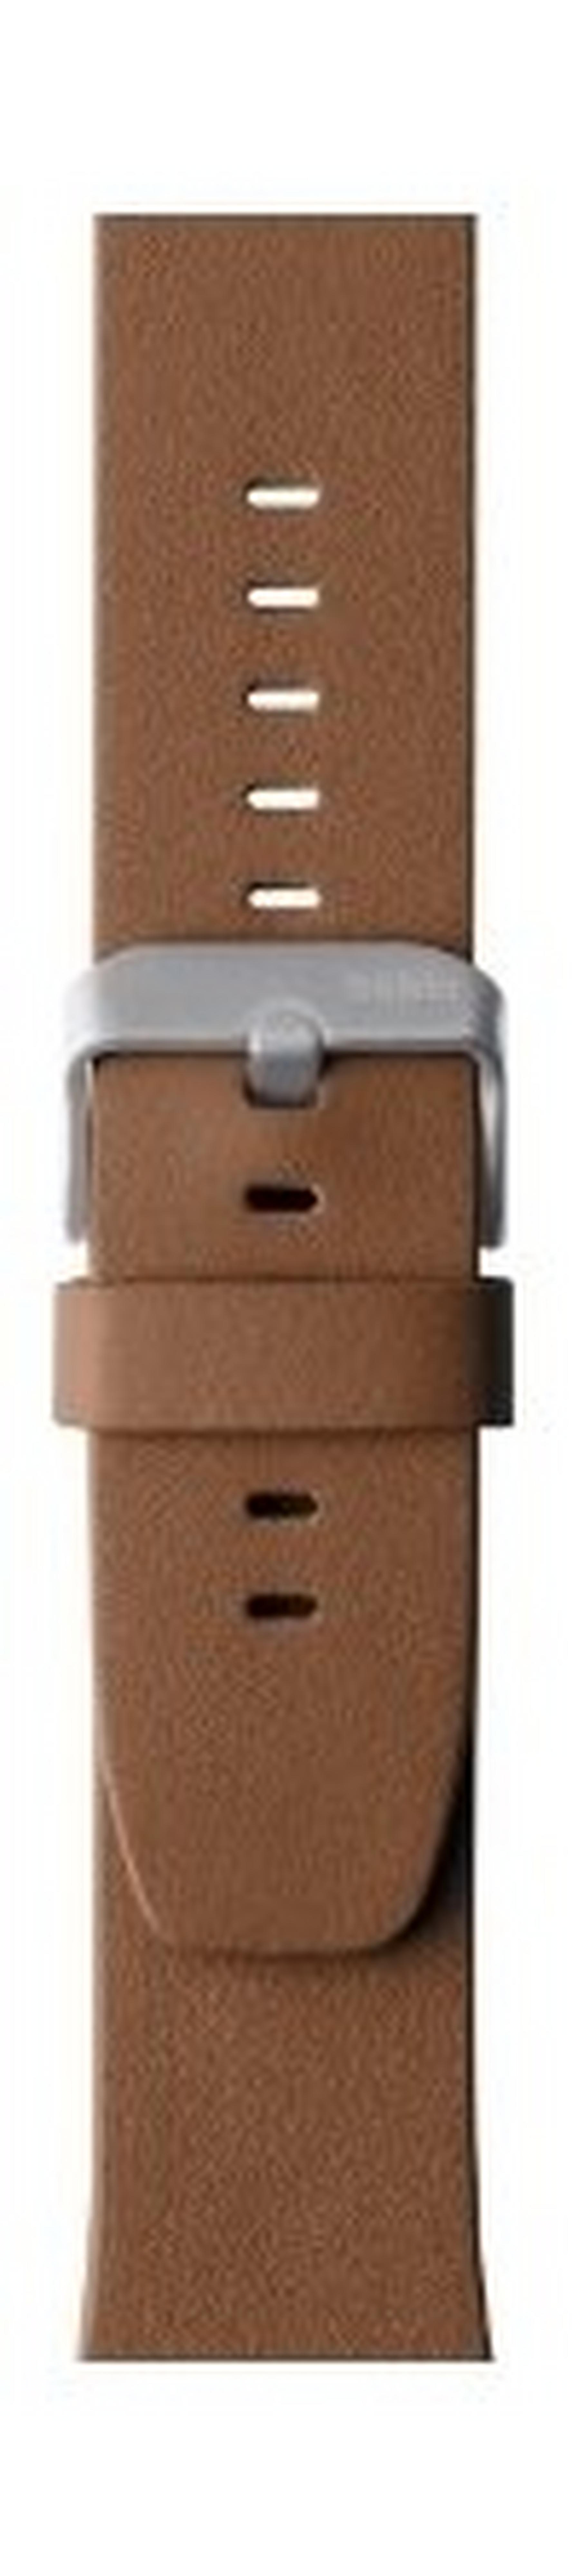 Belkin Classic 42mm Apple Watch Leather Band (F8W732BTC01) - Tan